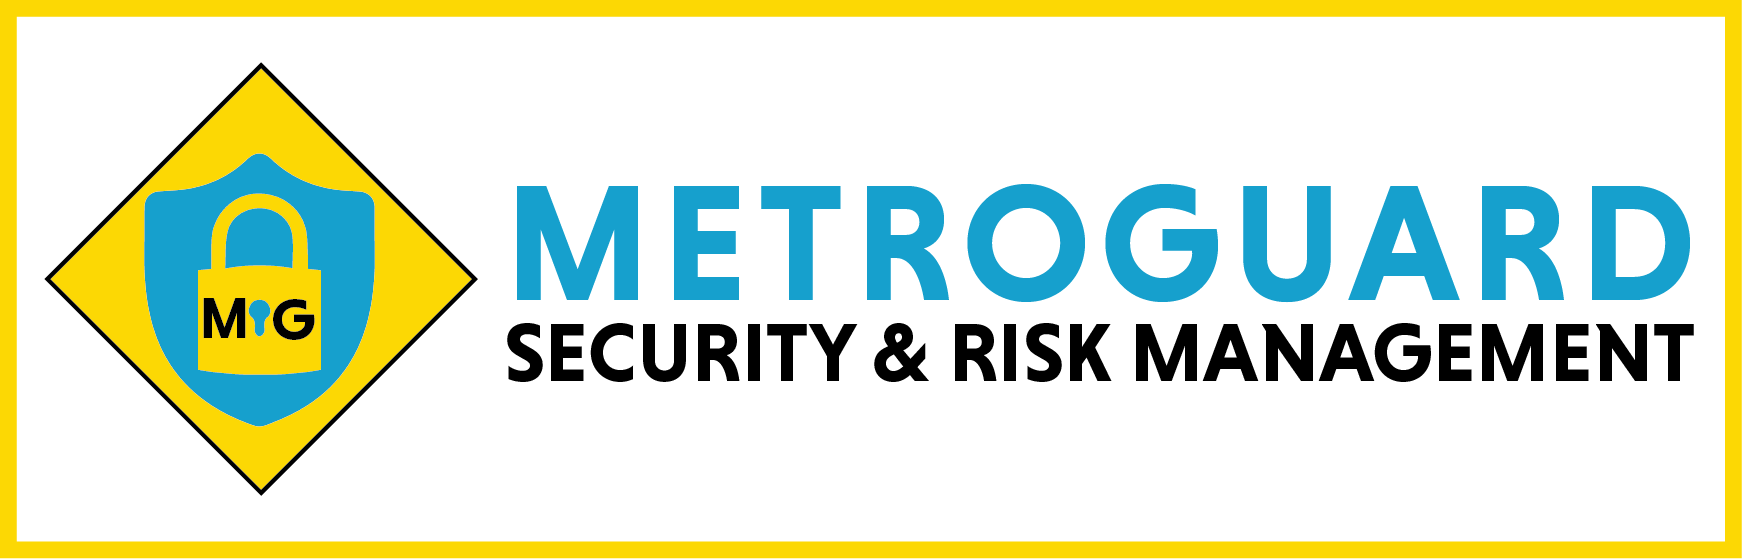 Metroguard Security & Risk Management, Inc. Logo